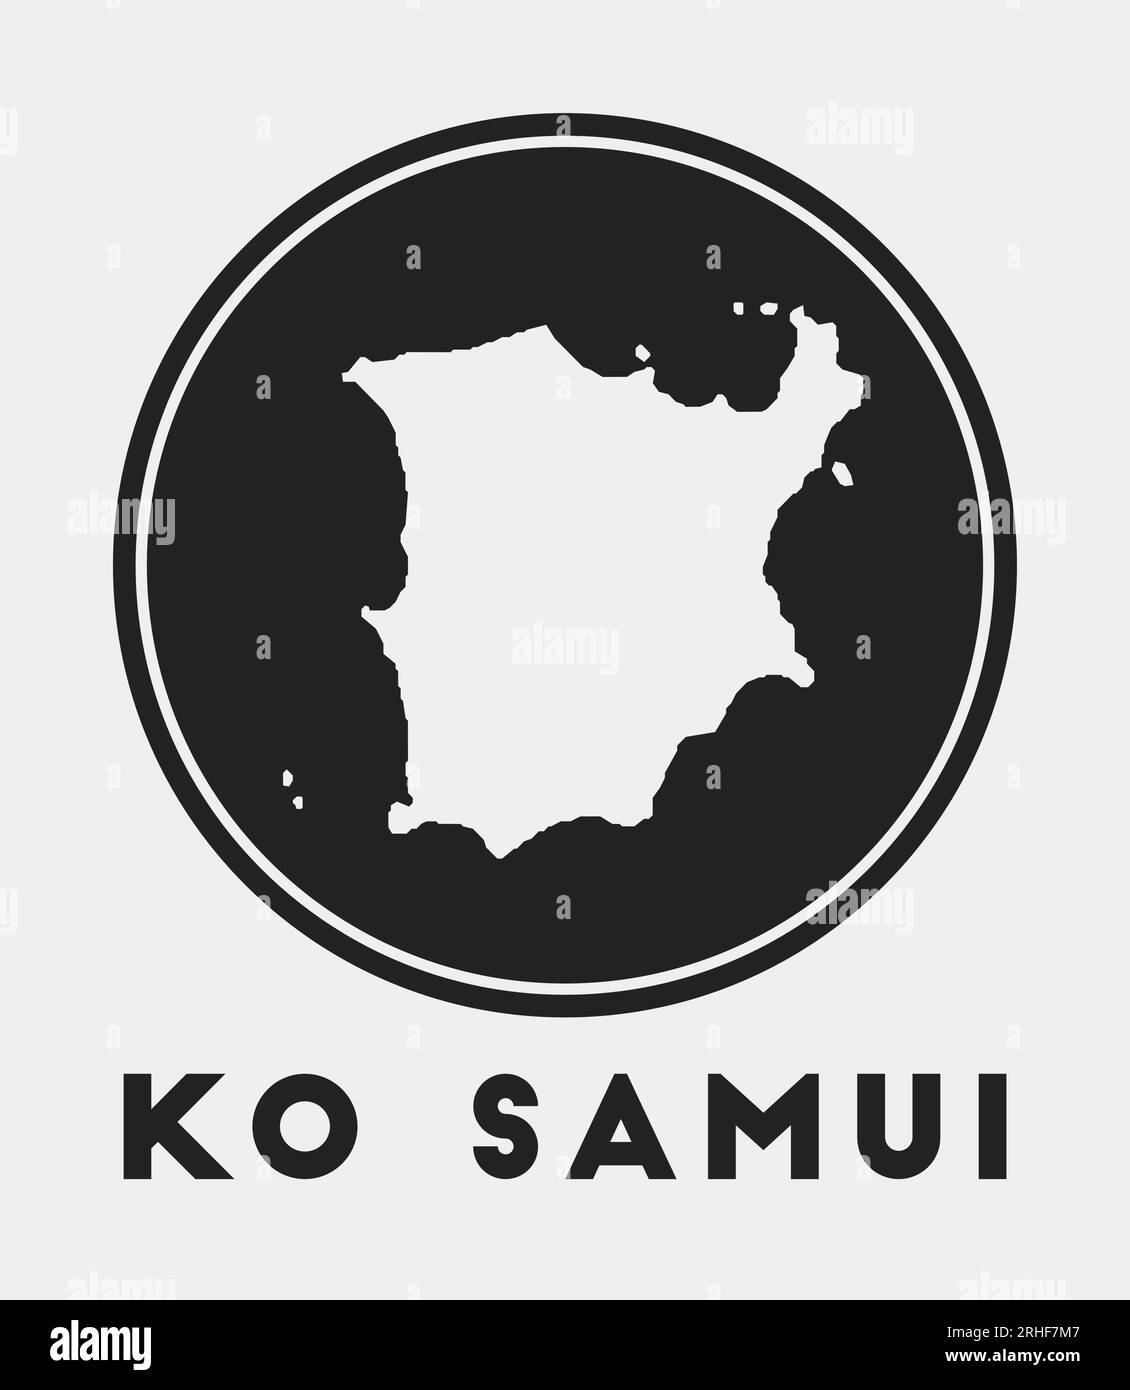 Ko Samui icon. Round logo with island map and title. Stylish Ko Samui badge with map. Vector illustration. Stock Vector